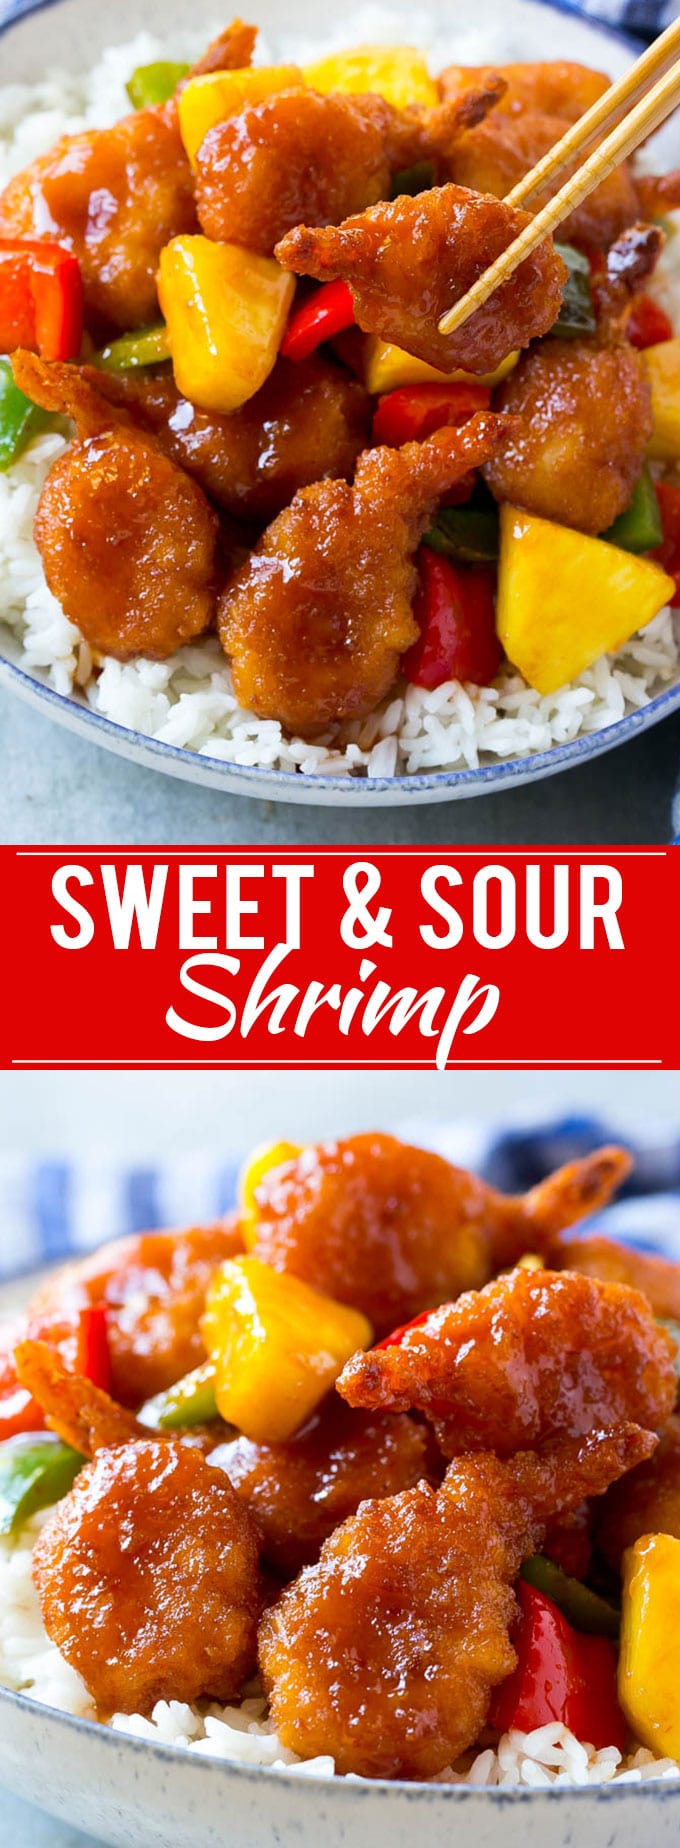 Sweet and Sour Shrimp Recipe | Easy Shrimp Recipe | Sheet Pan Meal | Sweet and Sour | Asian Shrimp Recipe #shrimp #asianfood #seafood #pineapple #dinner #dinneratthezoo